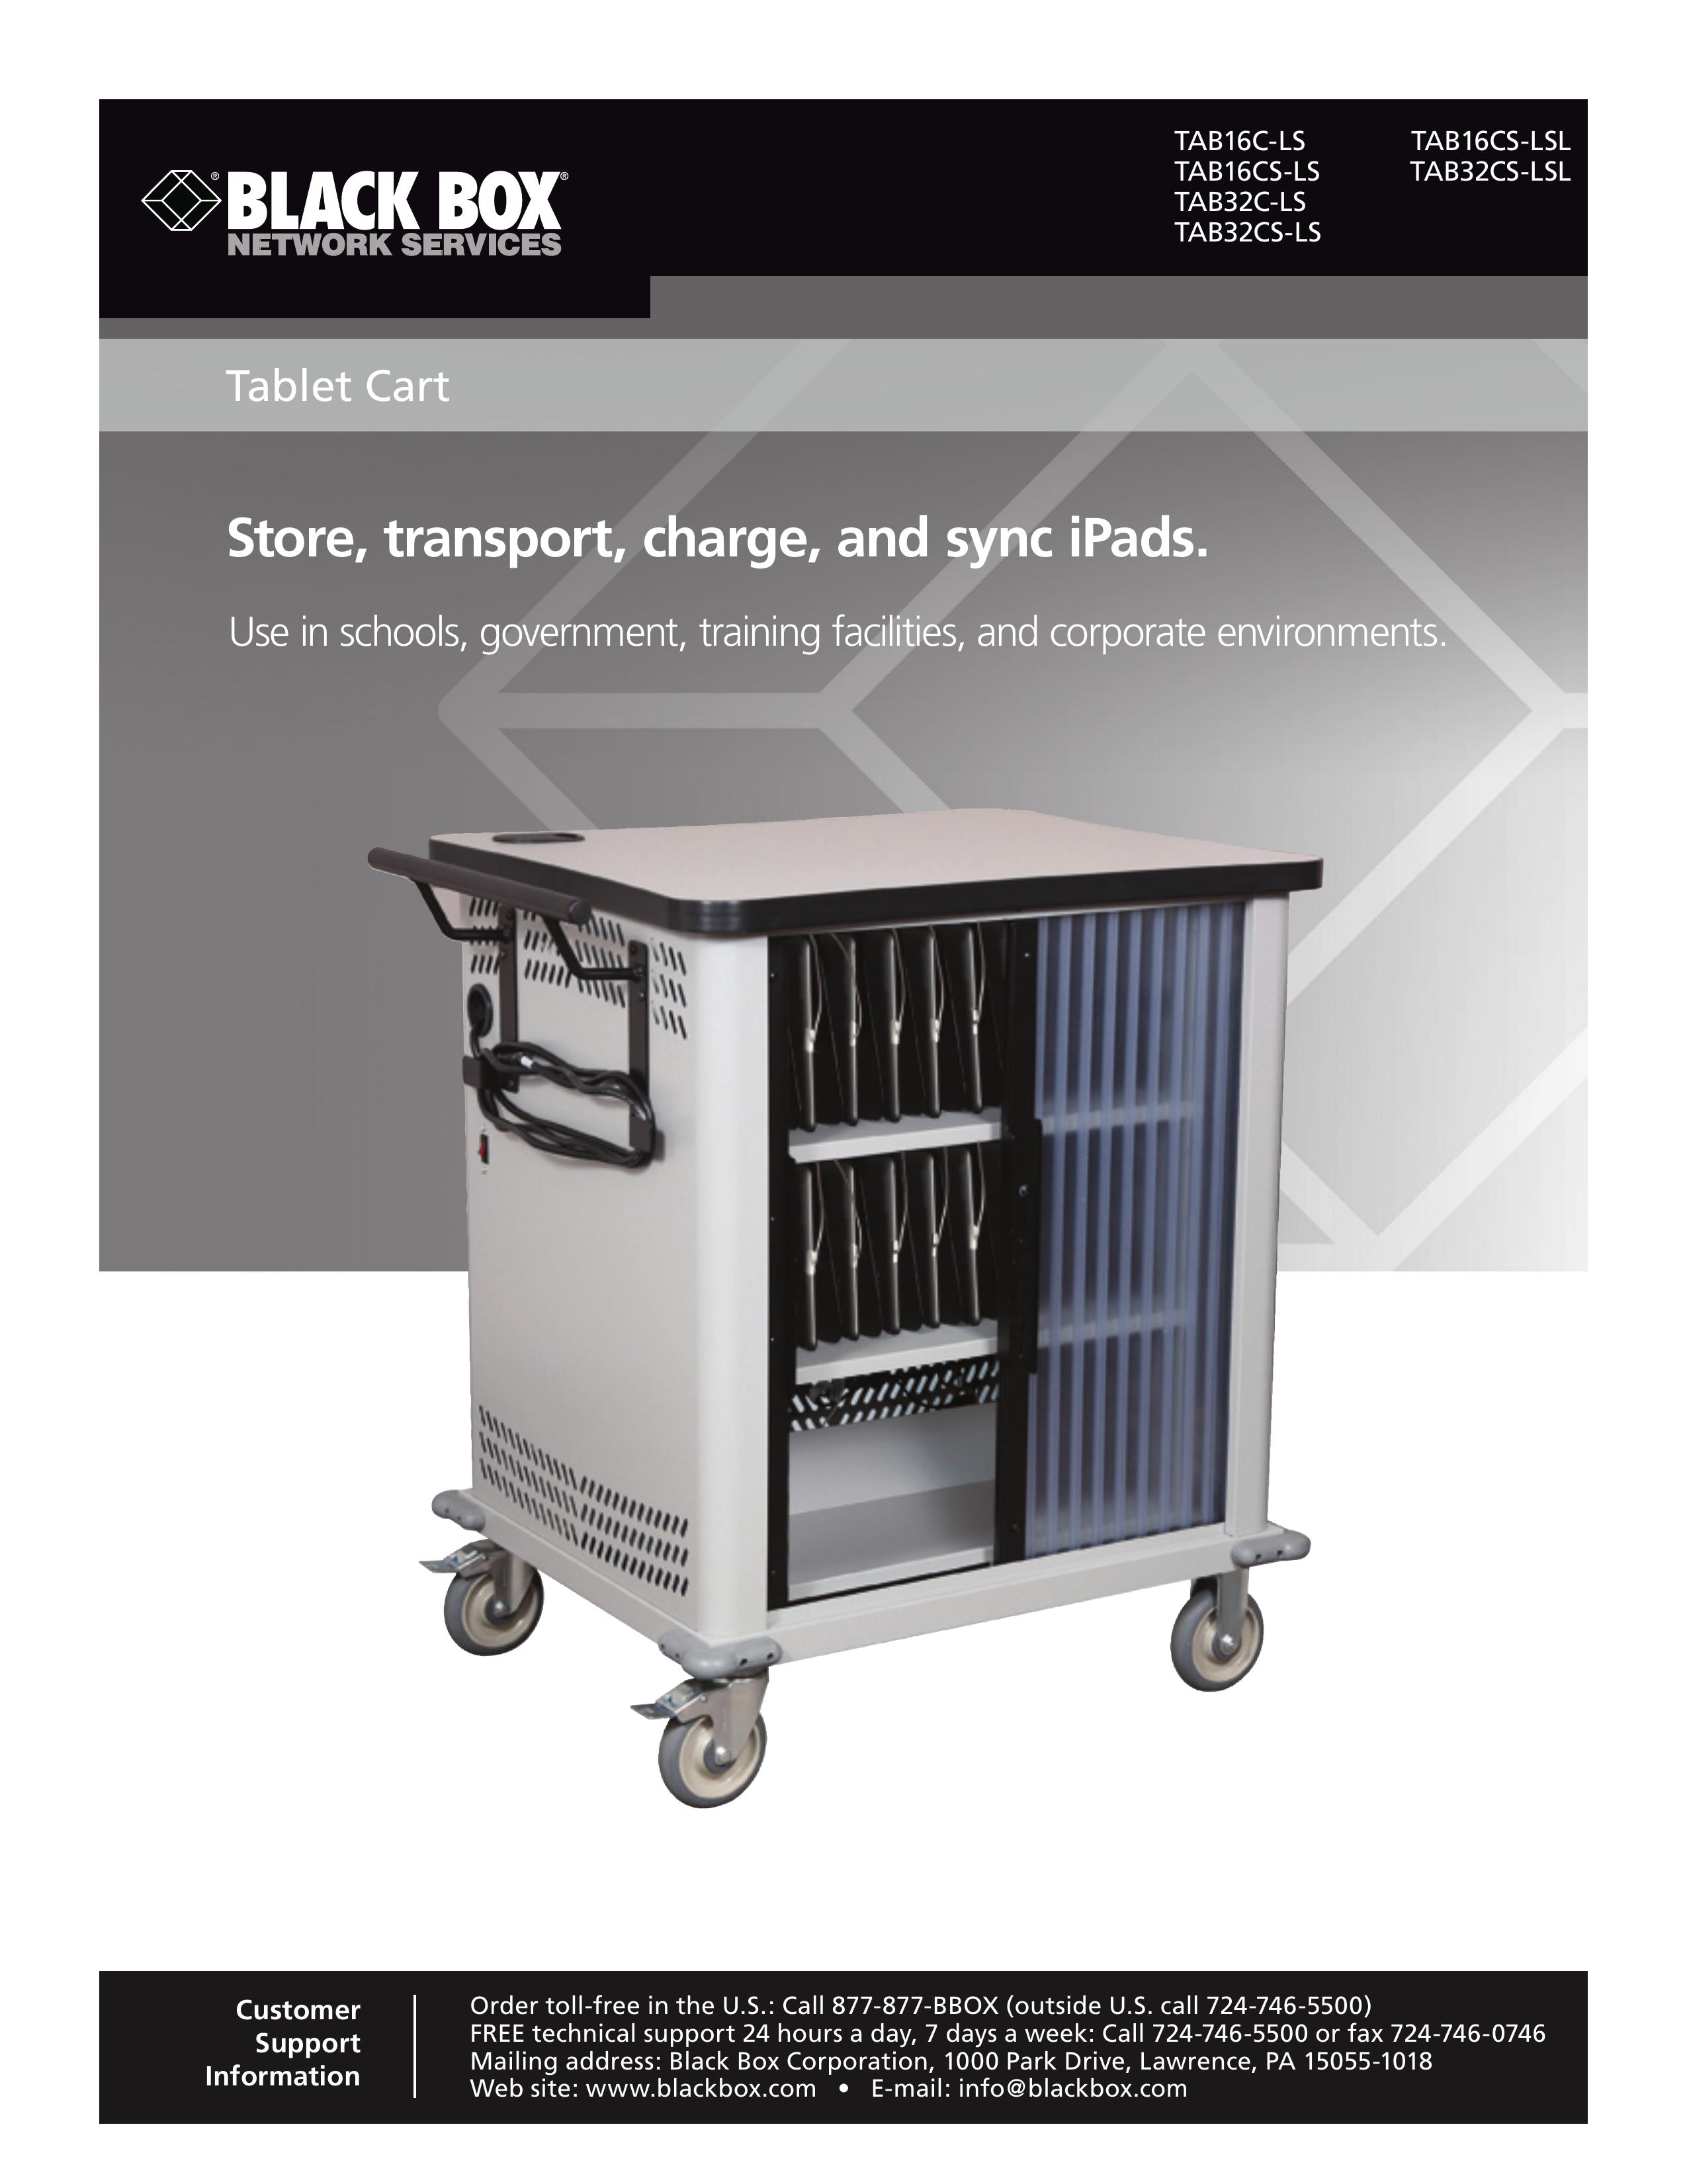 Black Box TAB16CS-LSL Outdoor Cart User Manual